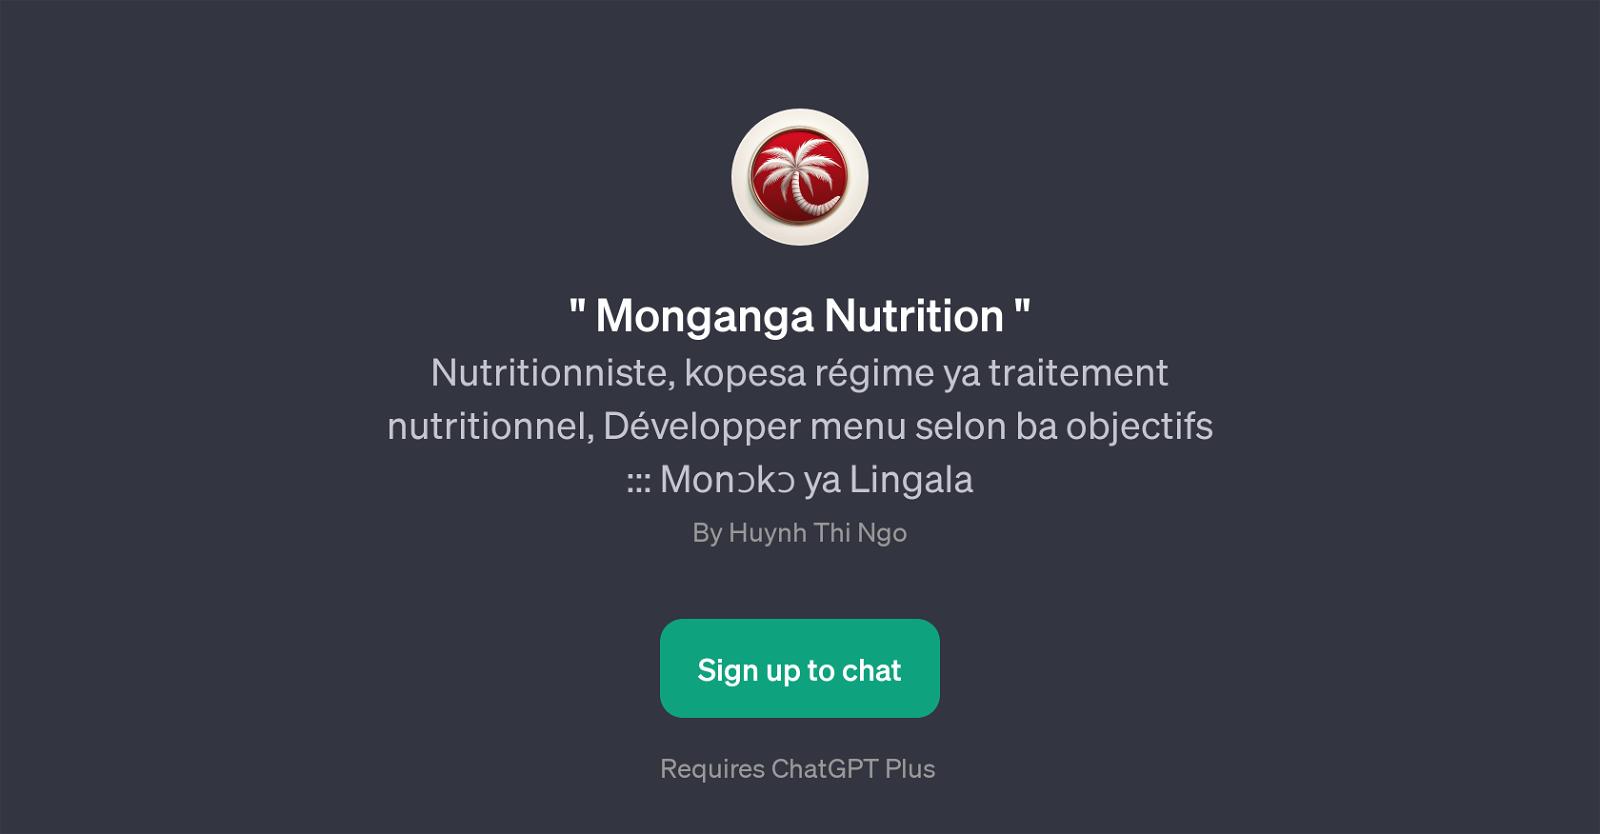 Monganga Nutrition website